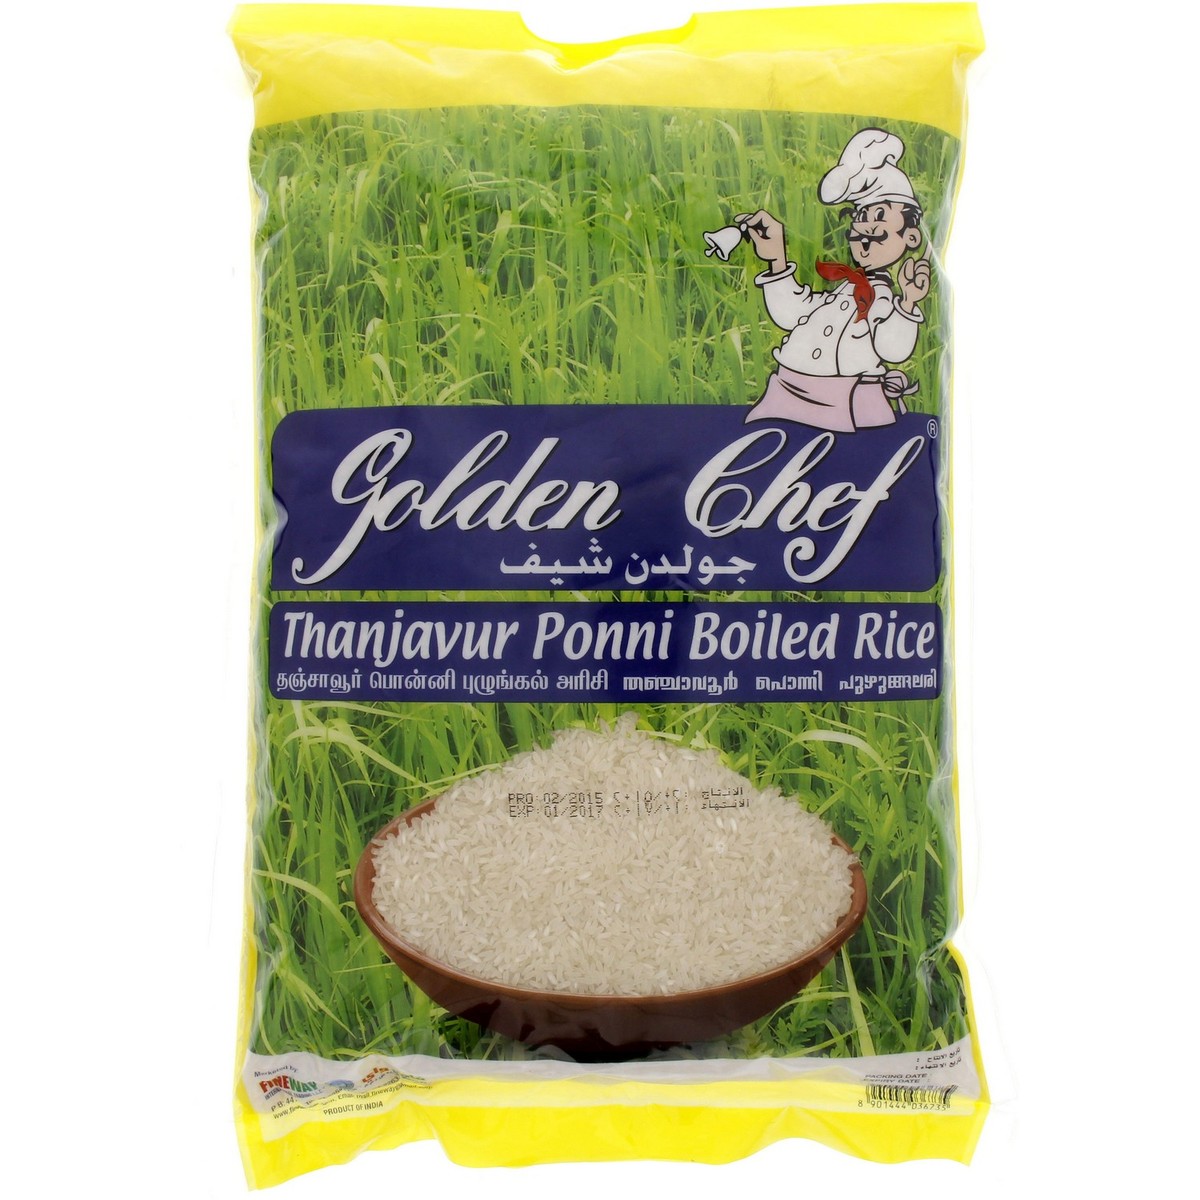 Golden Chef Thanjavur Ponni Boiled Rice 5 kg